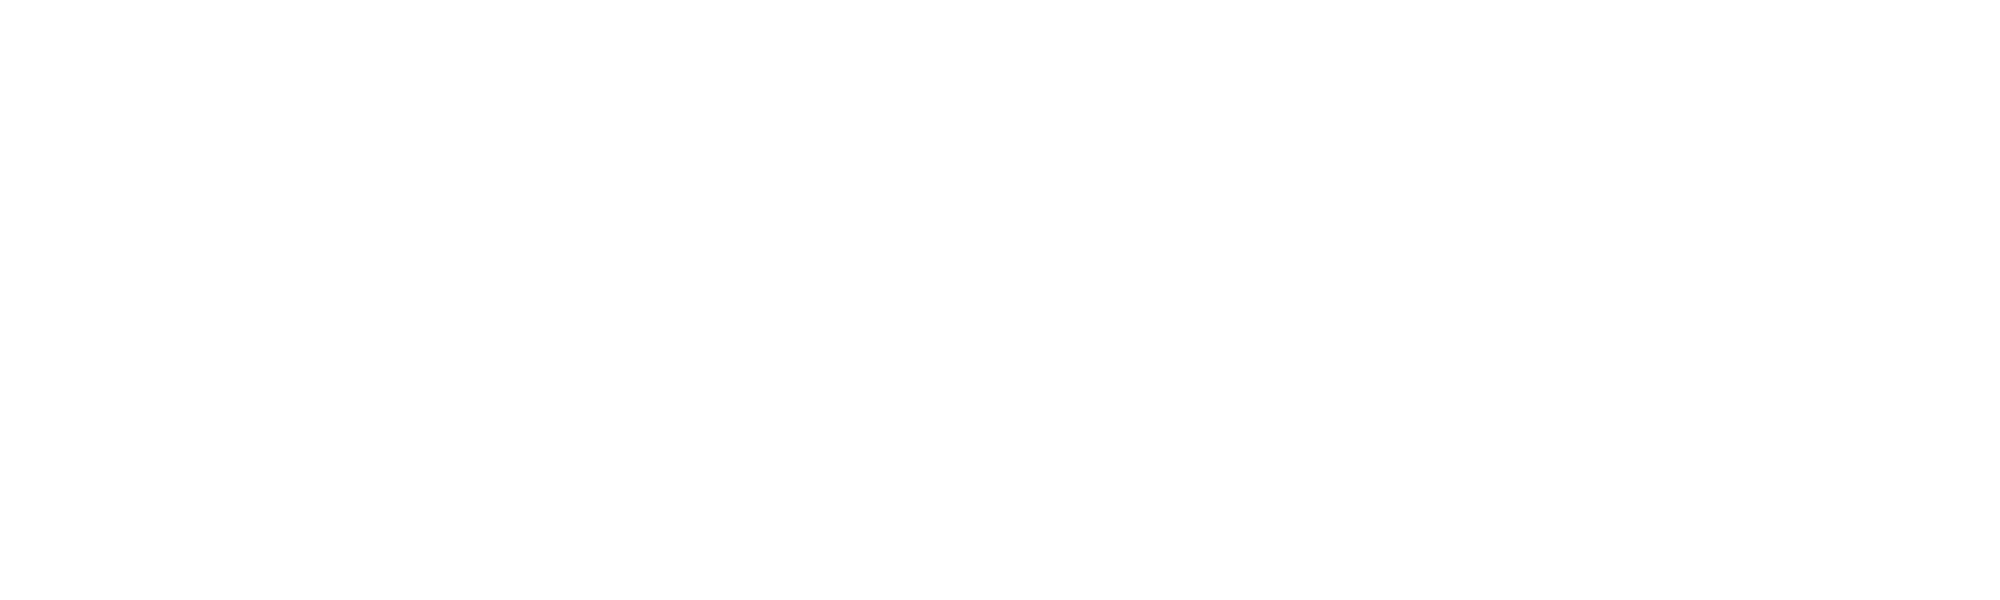 Placid Logo - SYFY - Watch Full Episodes | Lake Placid vs. Anaconda | SYFY